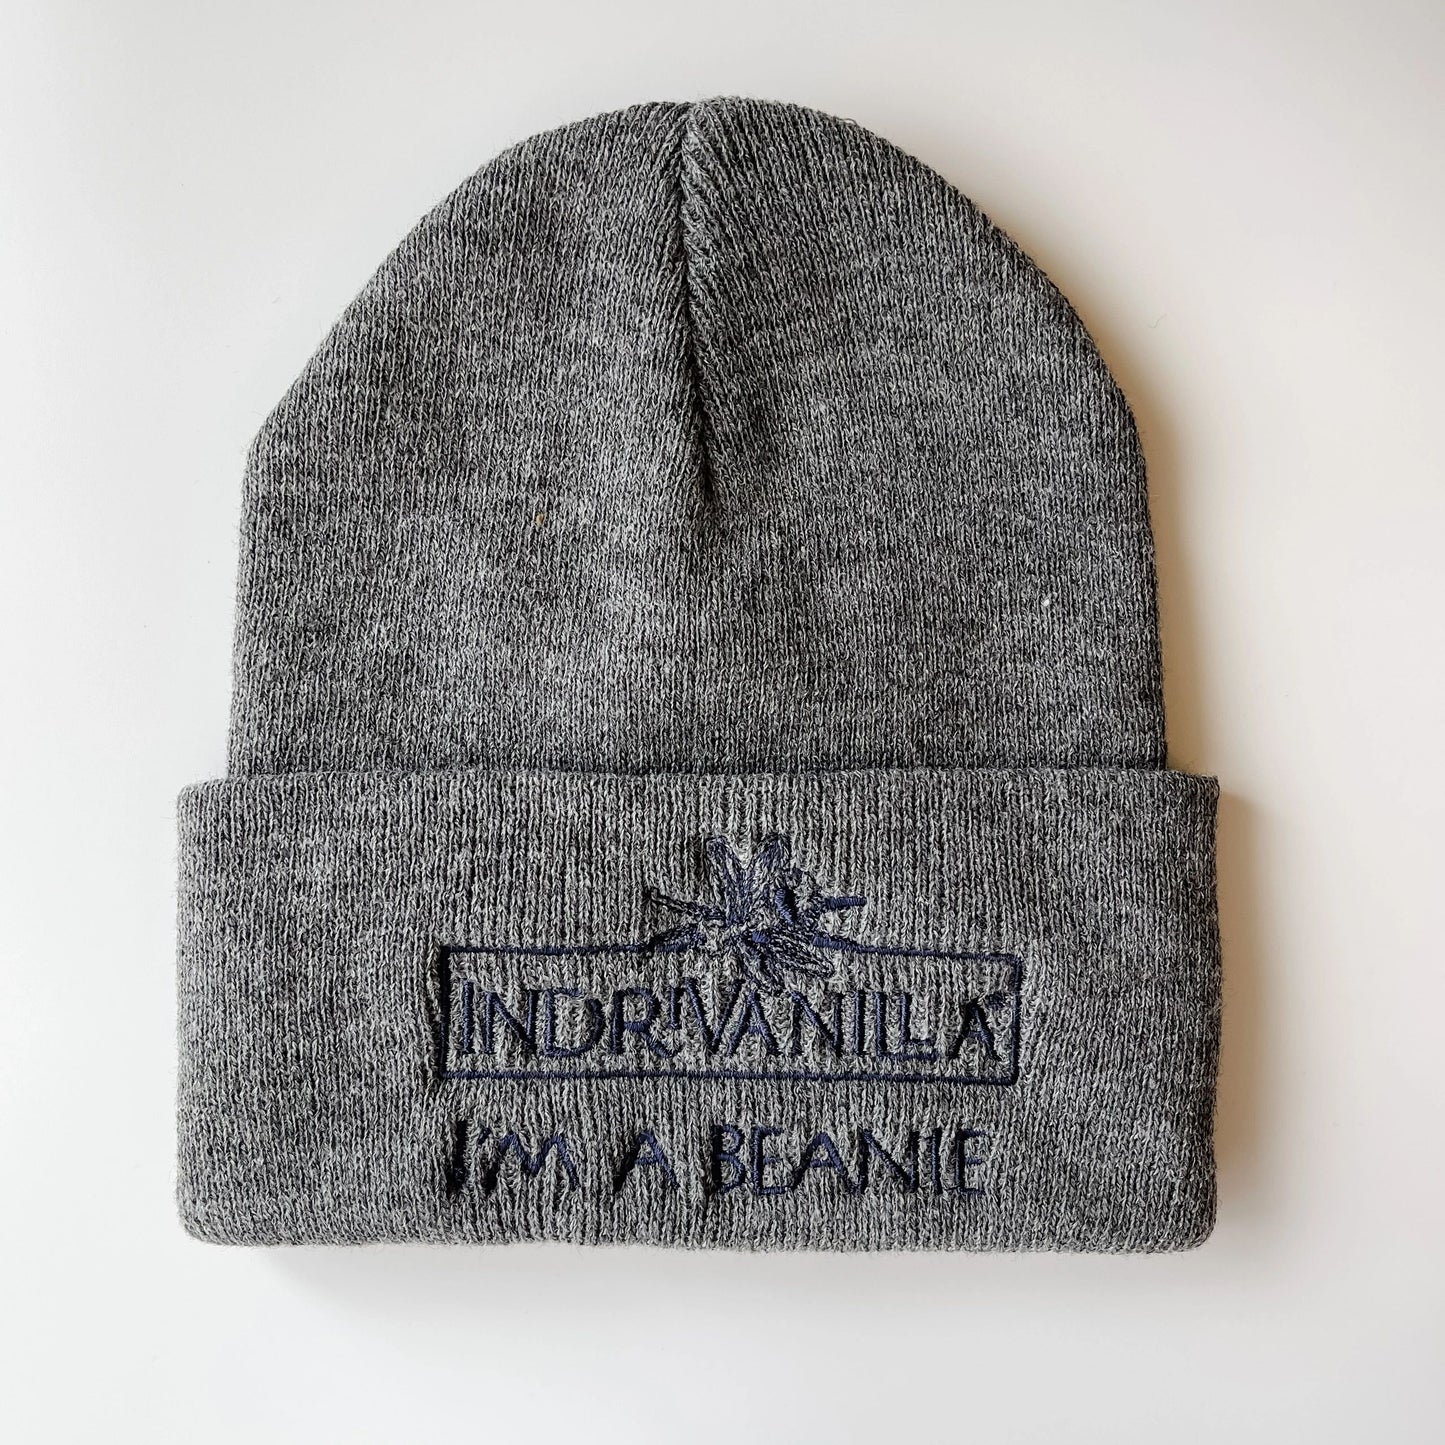 “I’m a Beanie” Winter Hat